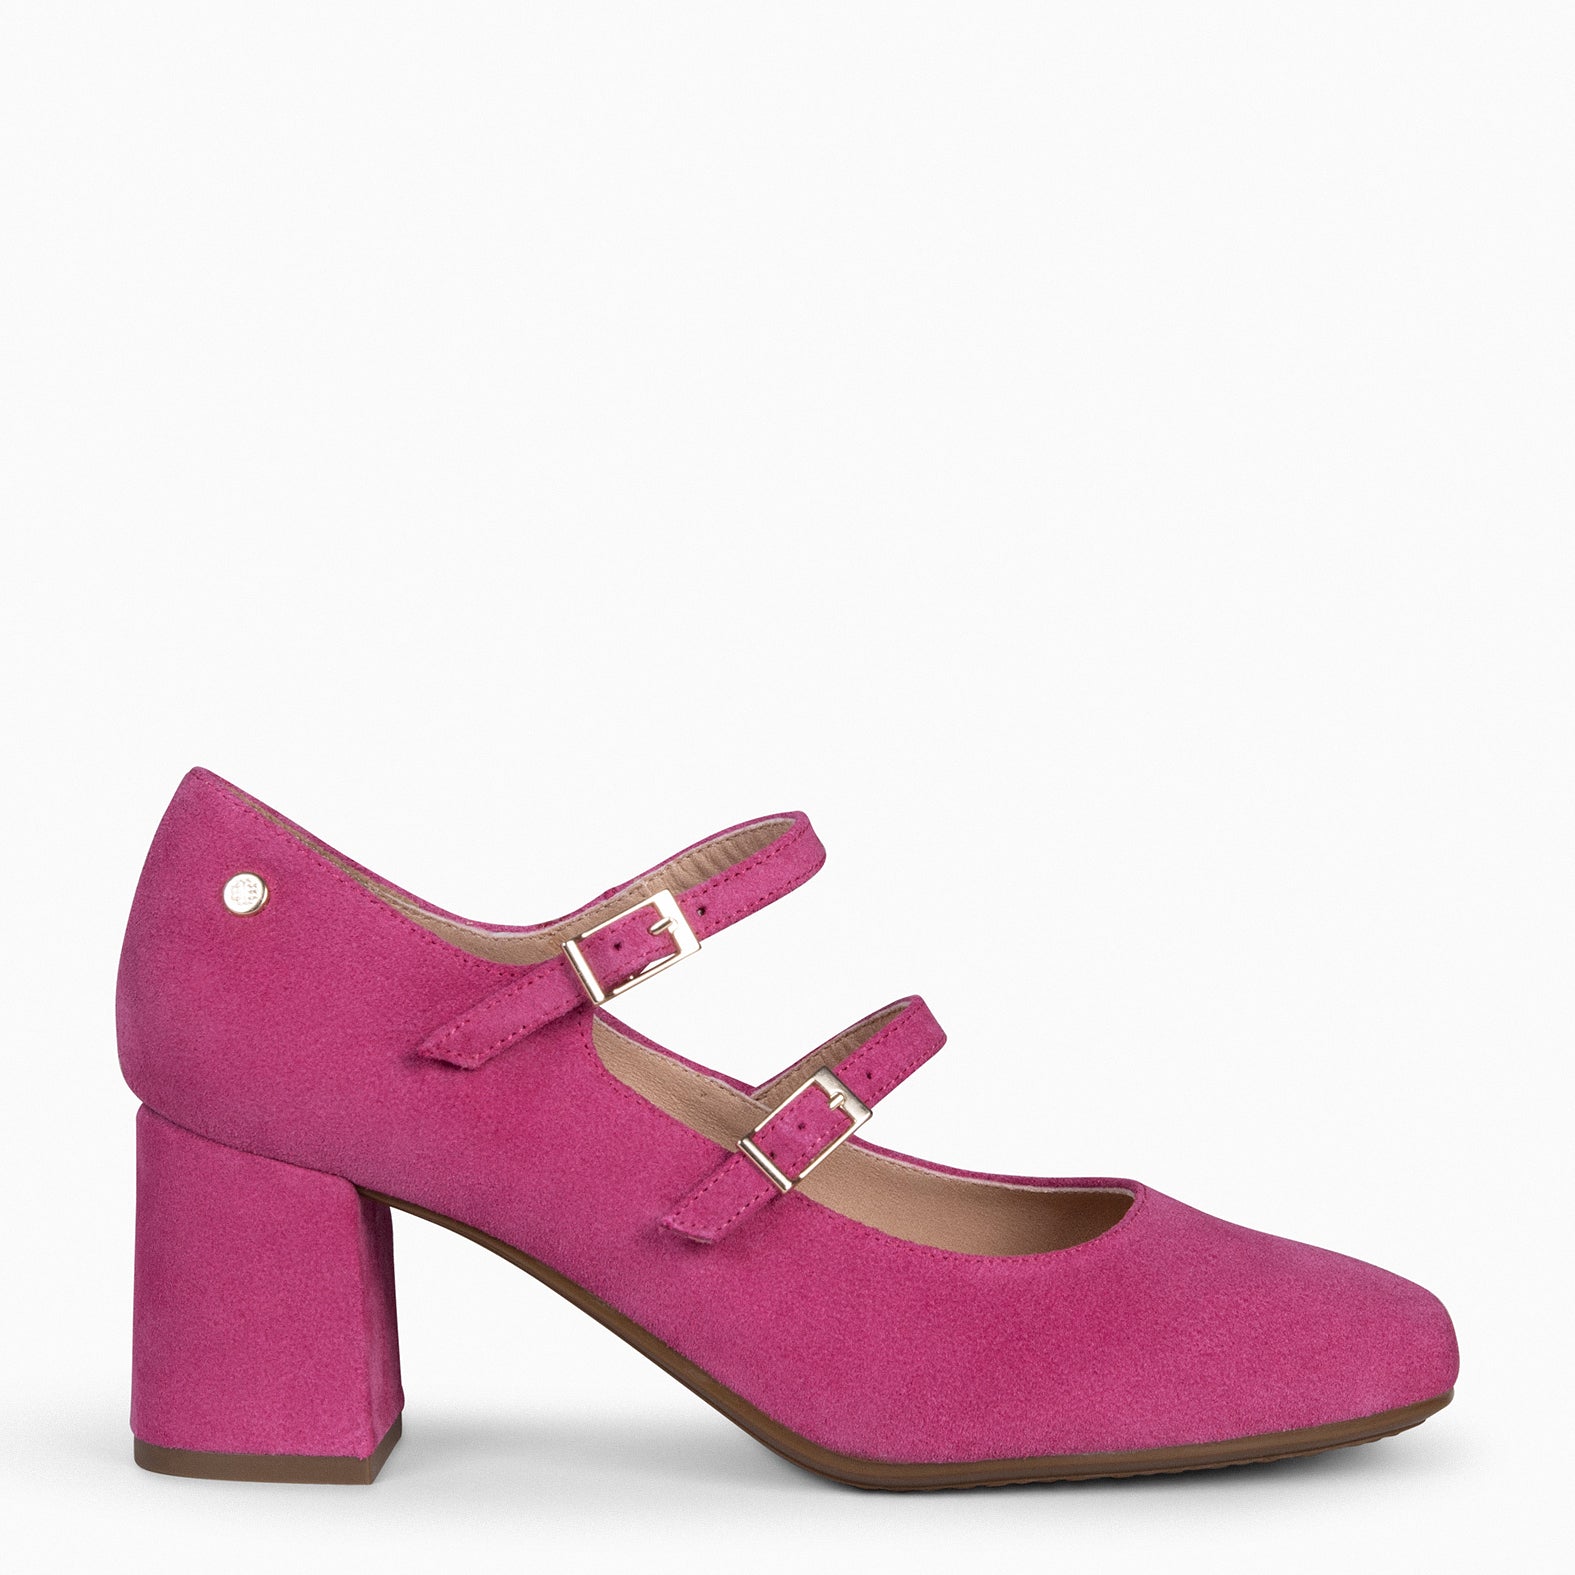 FEBRIS – FUCHSIA leather heel with straps